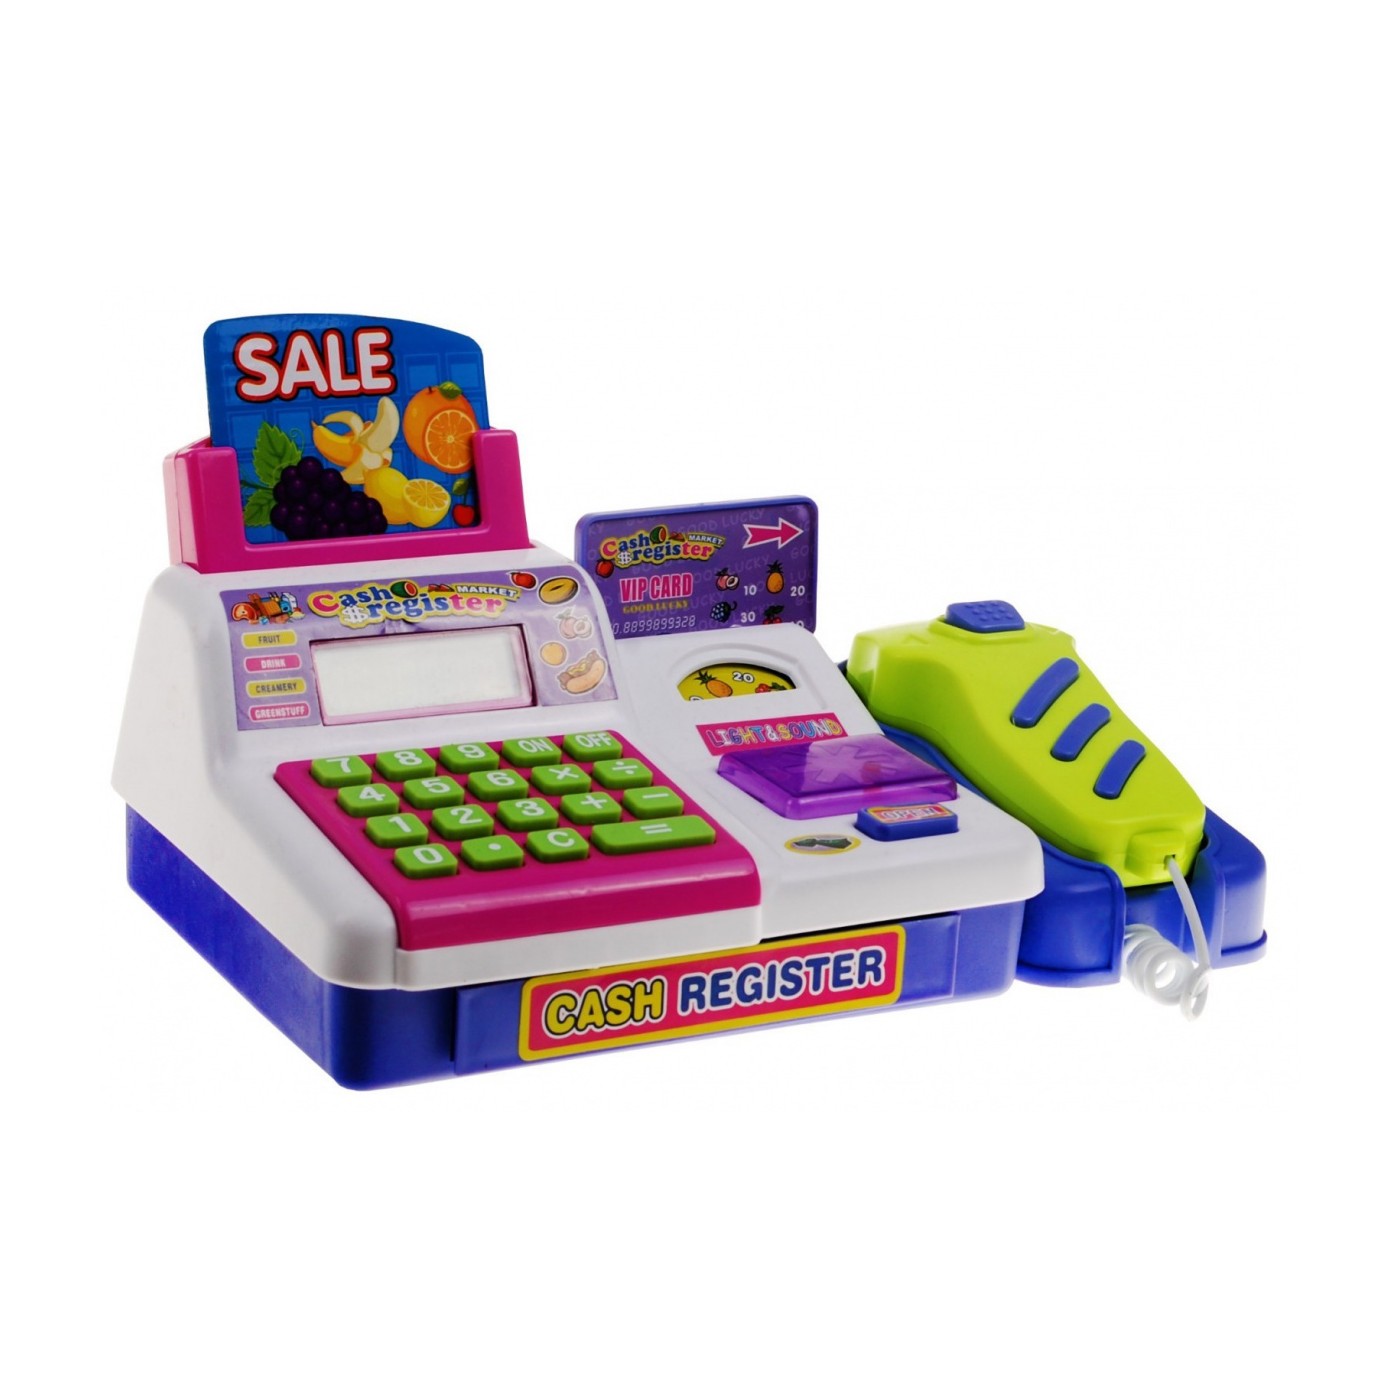 Safe Shopping Cart Calculator Pink